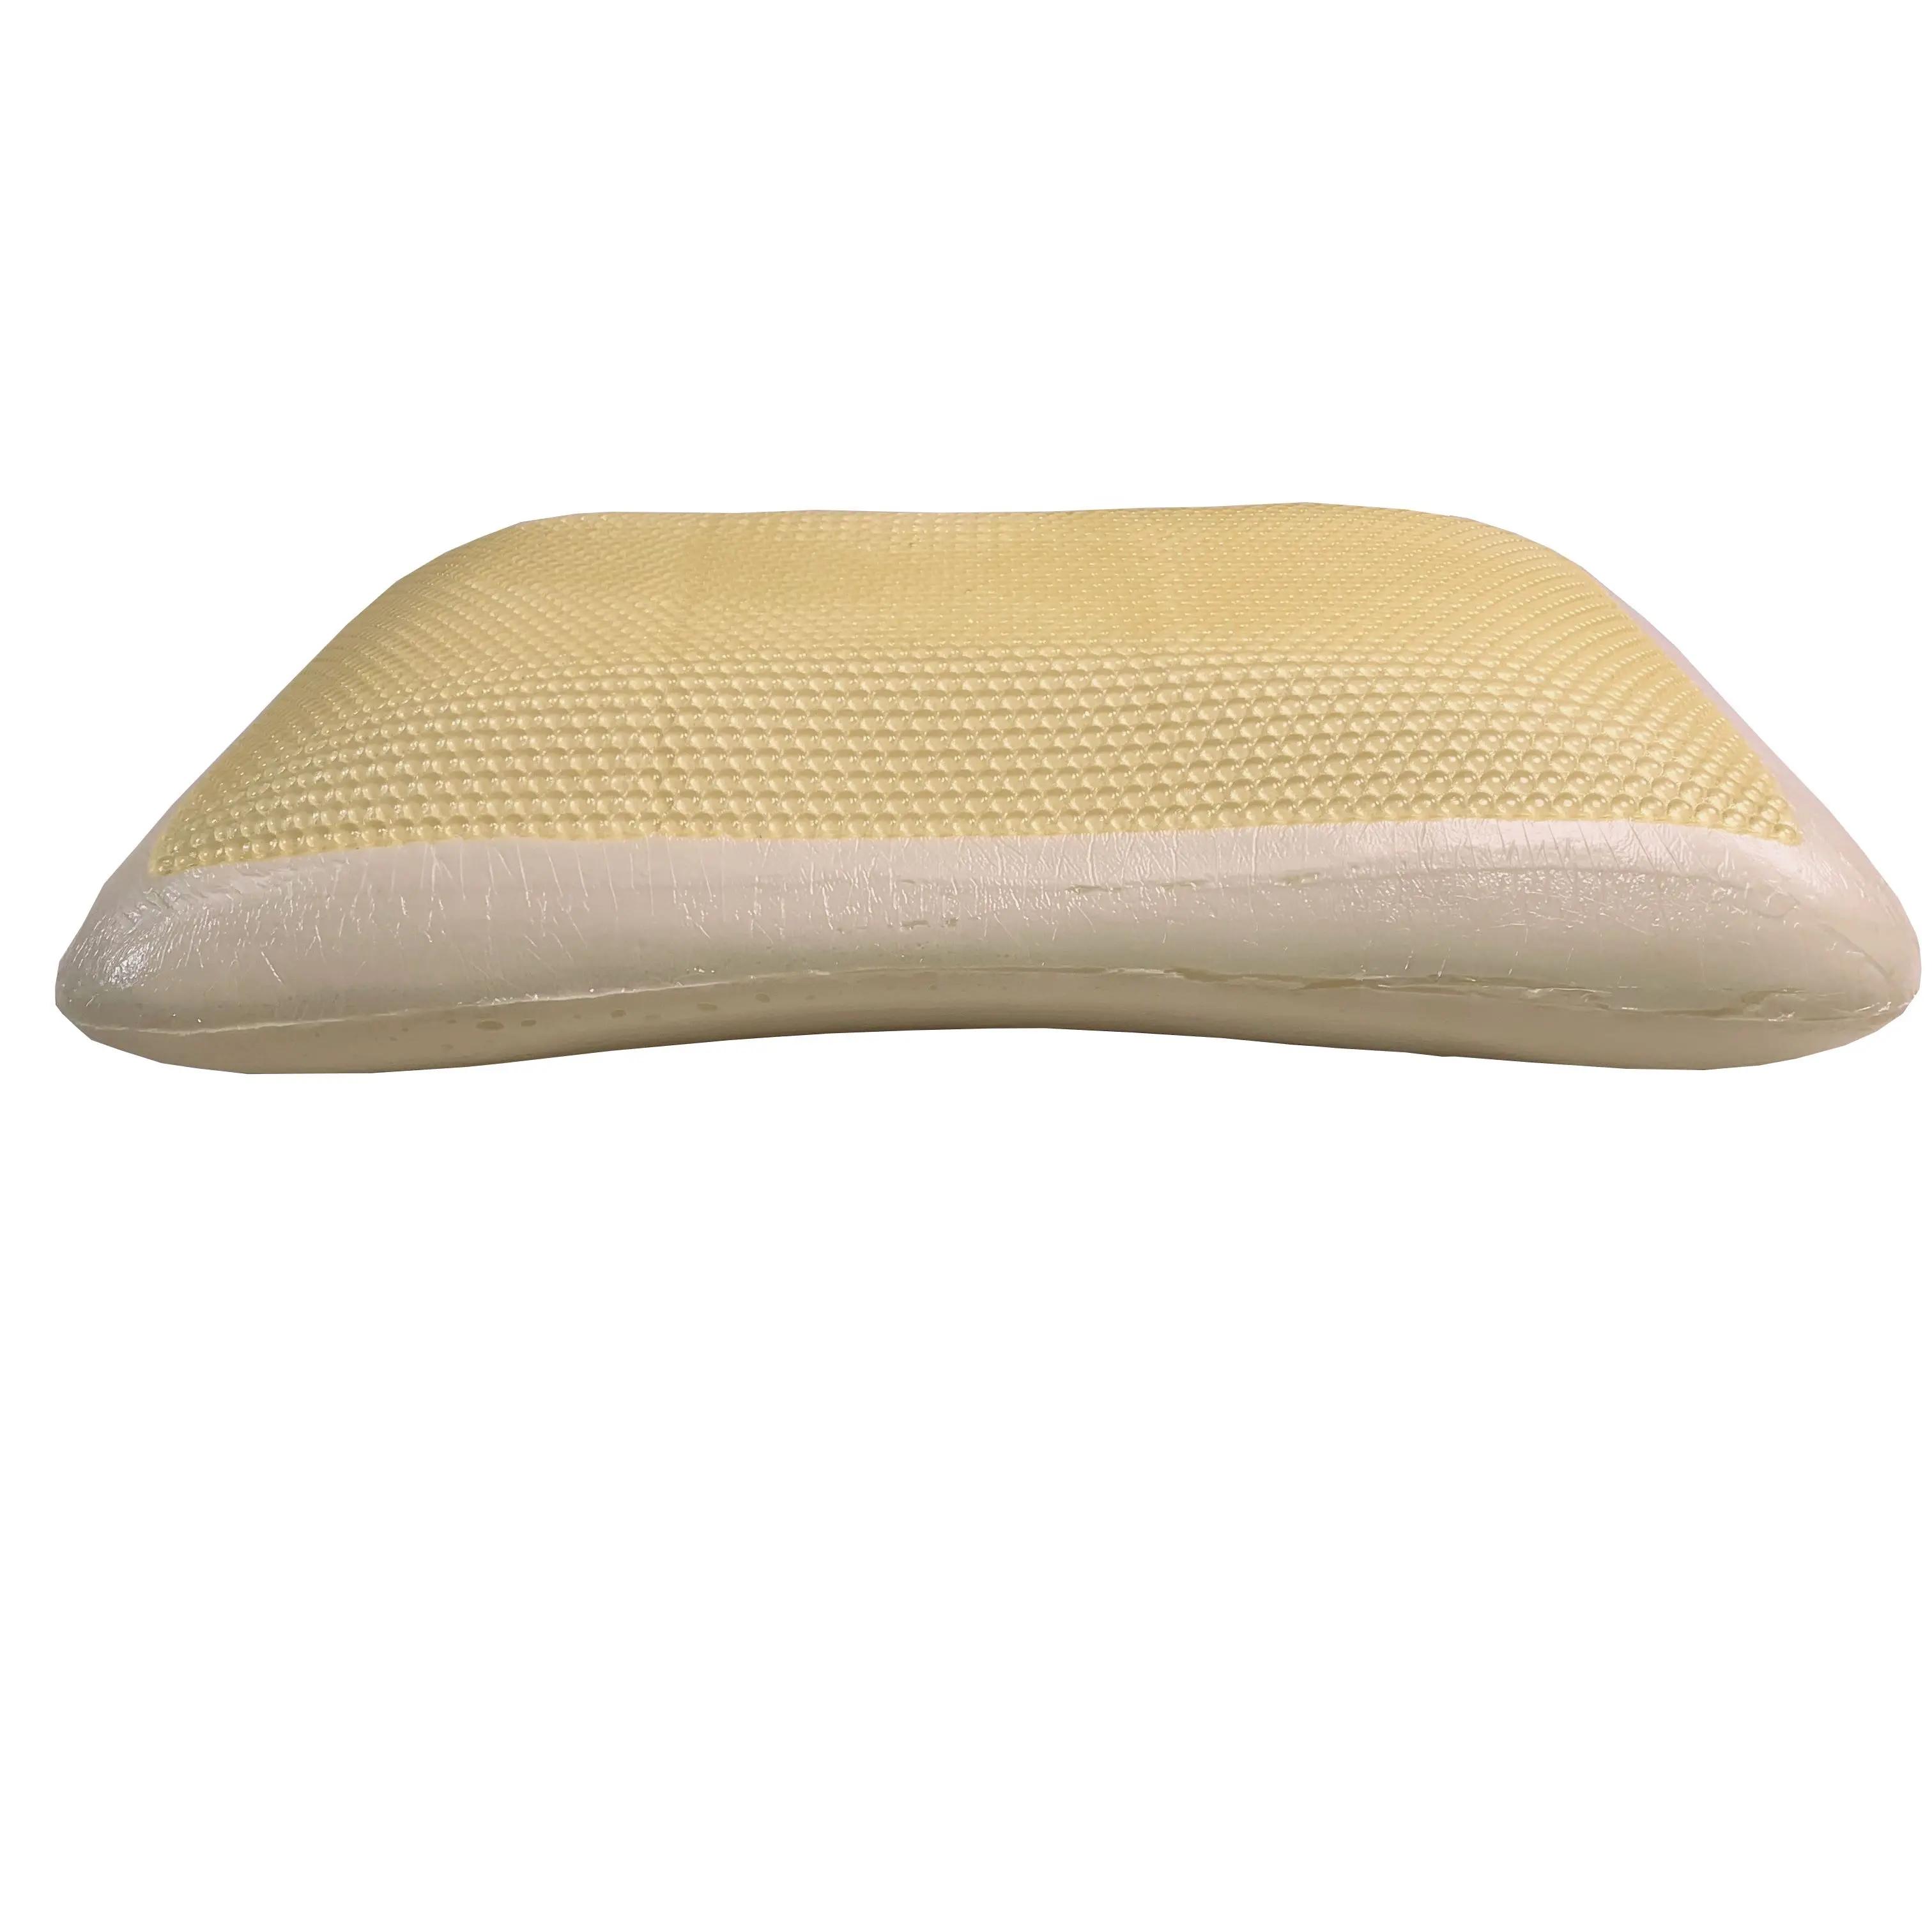 Gel Cooling Memory Foam Pillow Sleep Cooling Bed Neck Rebound Pillows For Sleeping